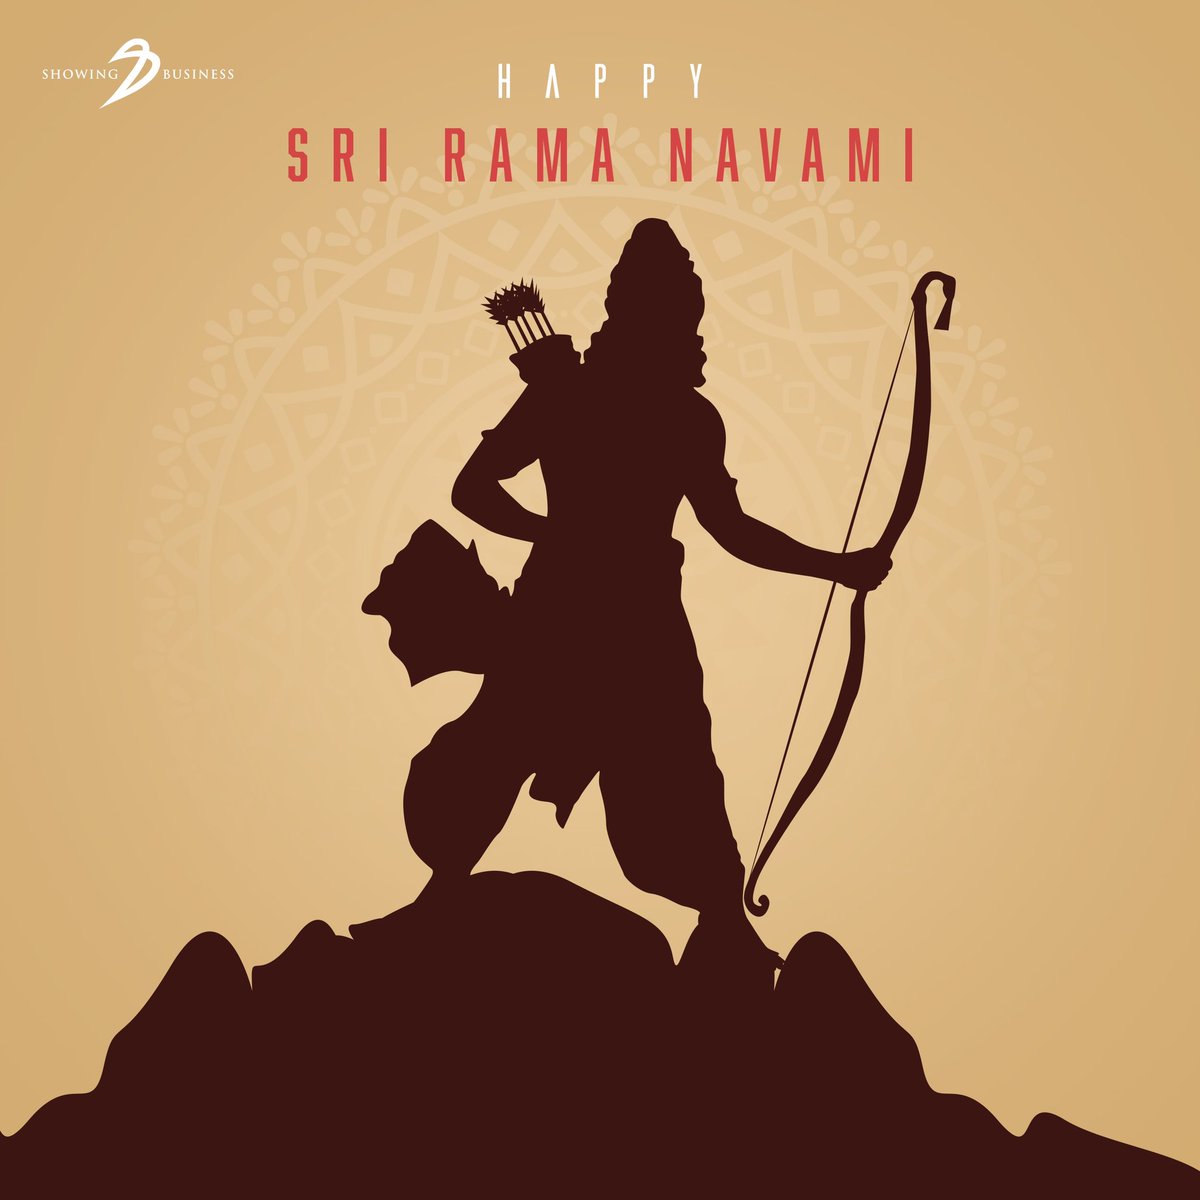 Wishing all a blessed Sri Rama Navami!